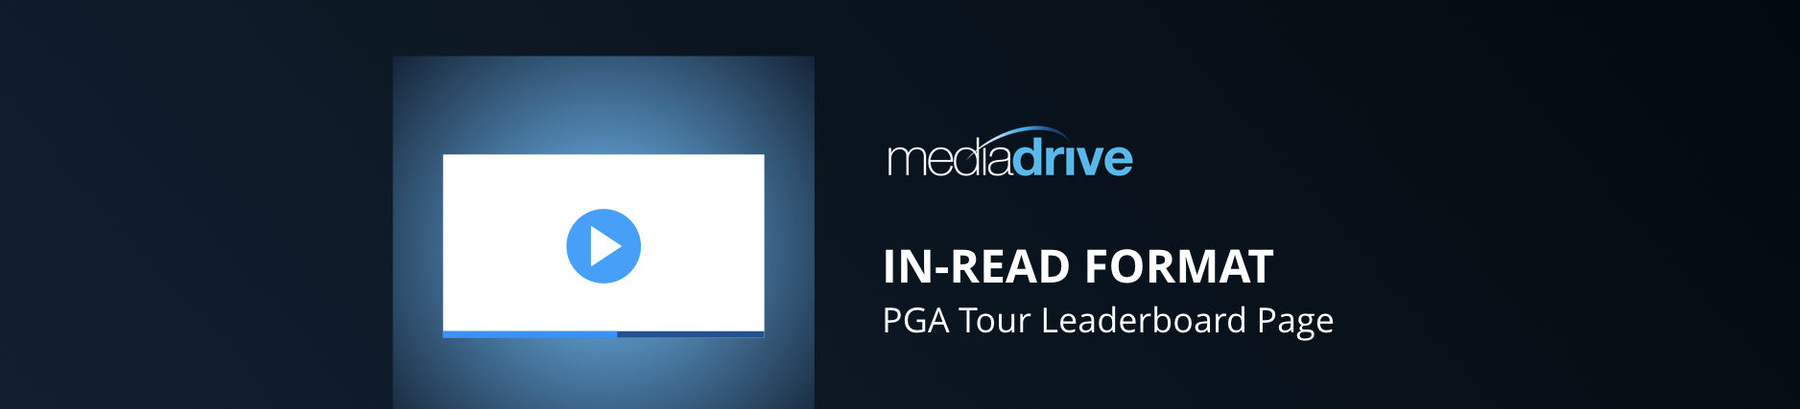 media drive header inread format.001